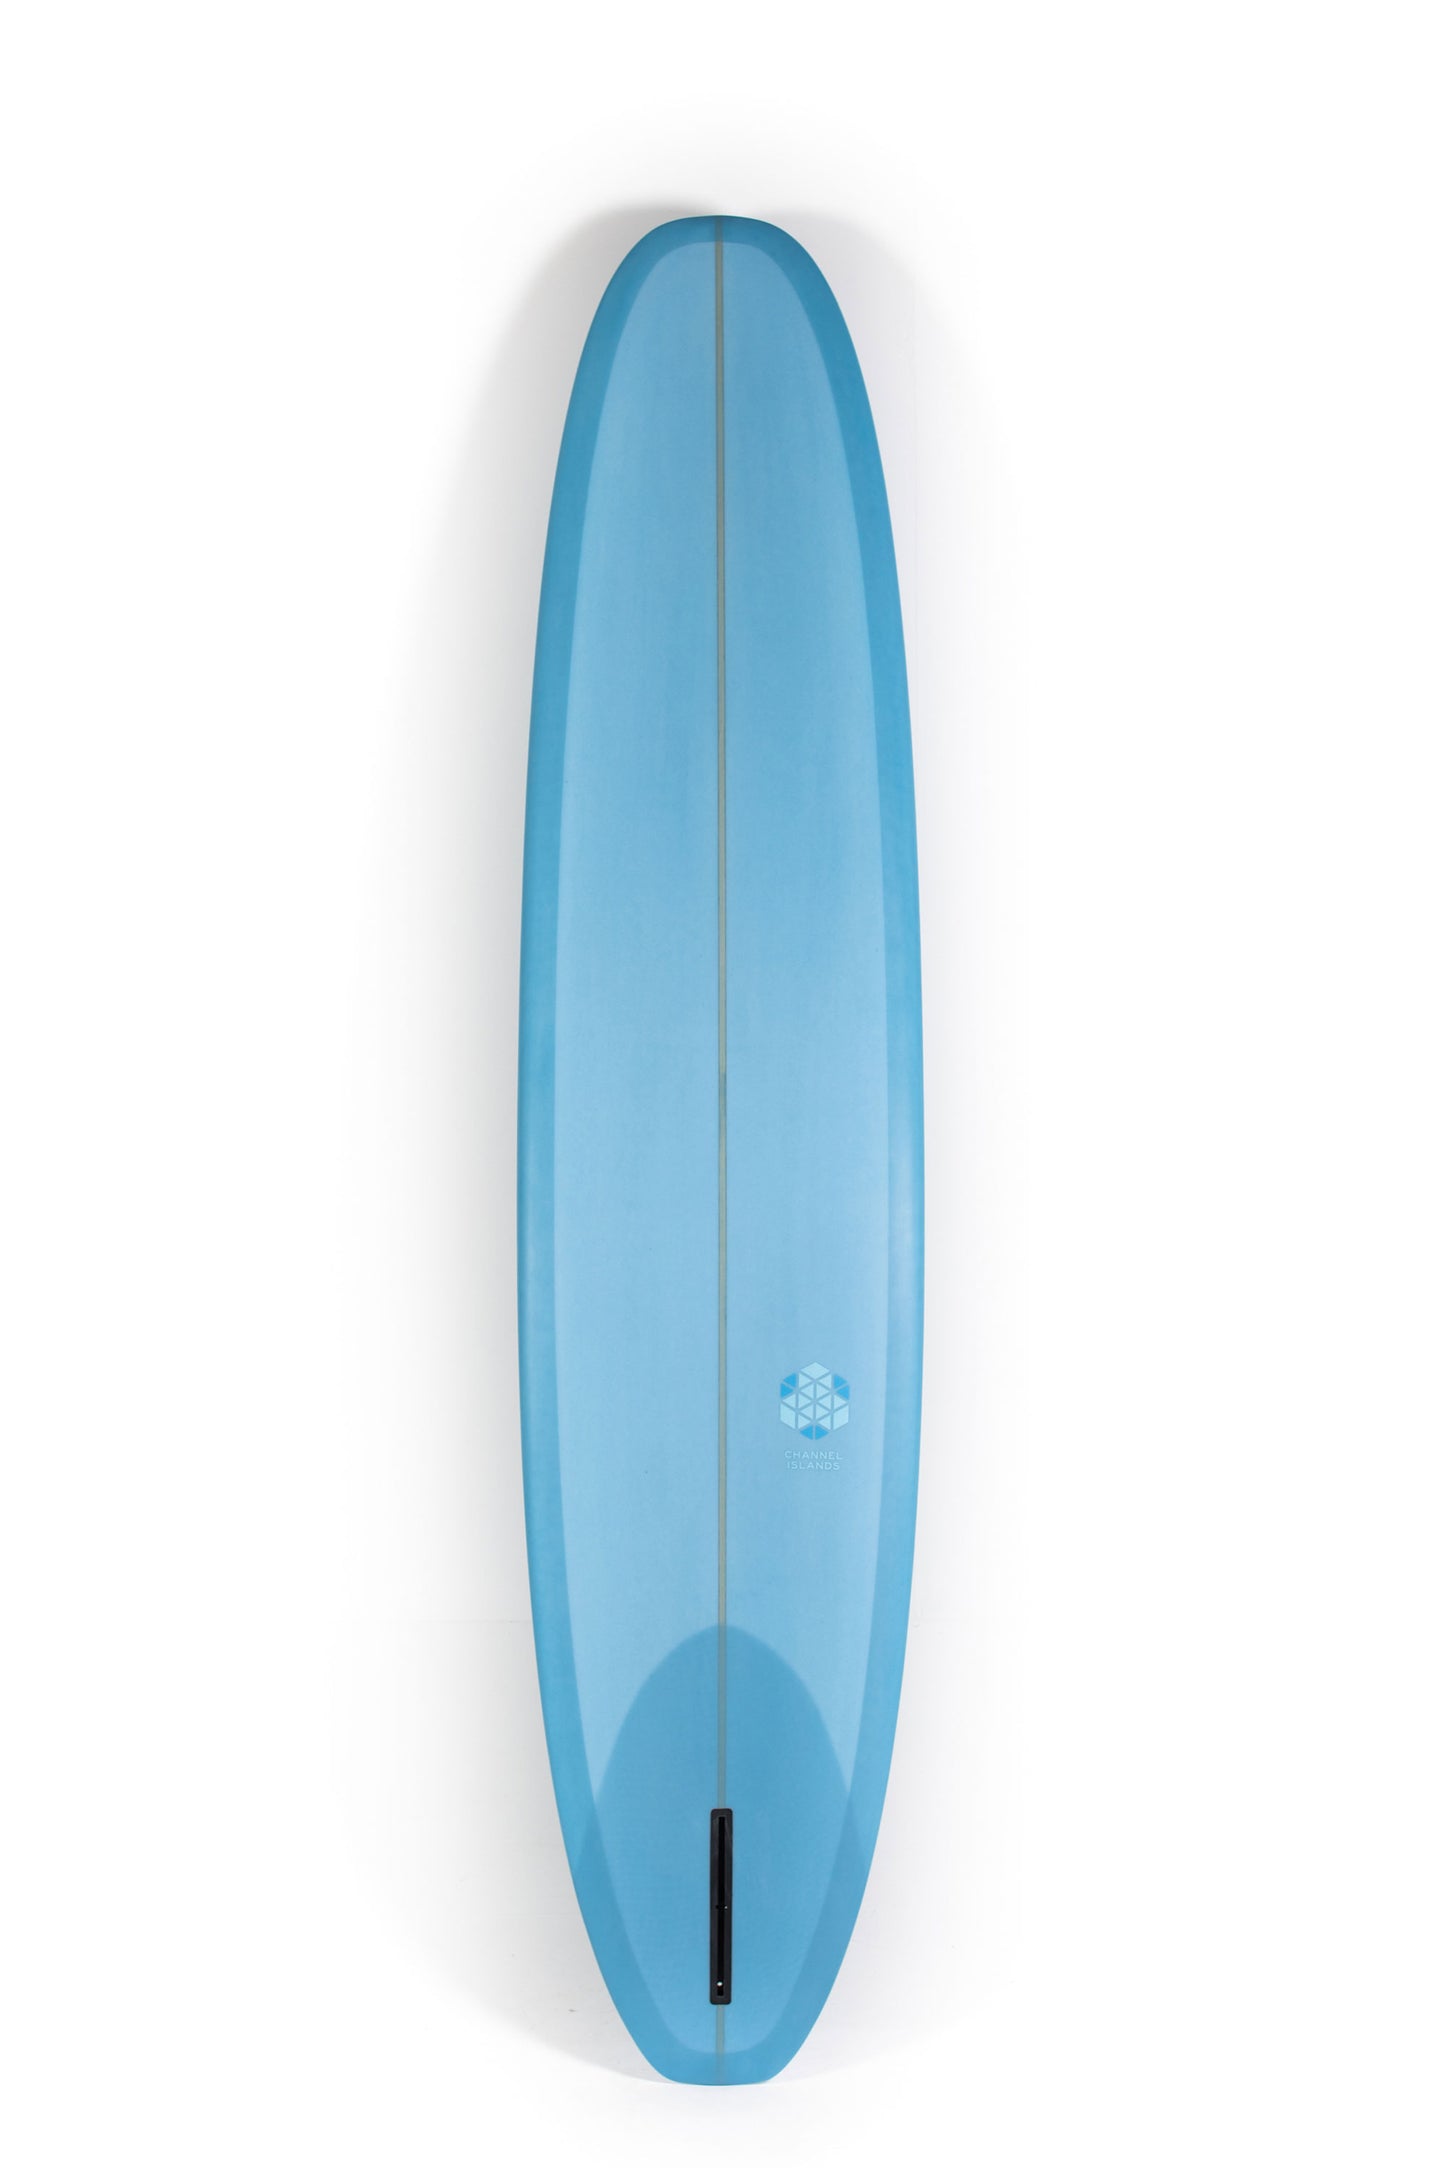 Pukas Surf Shop - Channel Islands - CI LOG by Al Merrick - 9'0" x 22 5/8 x 3 - 70.4L - CI28625